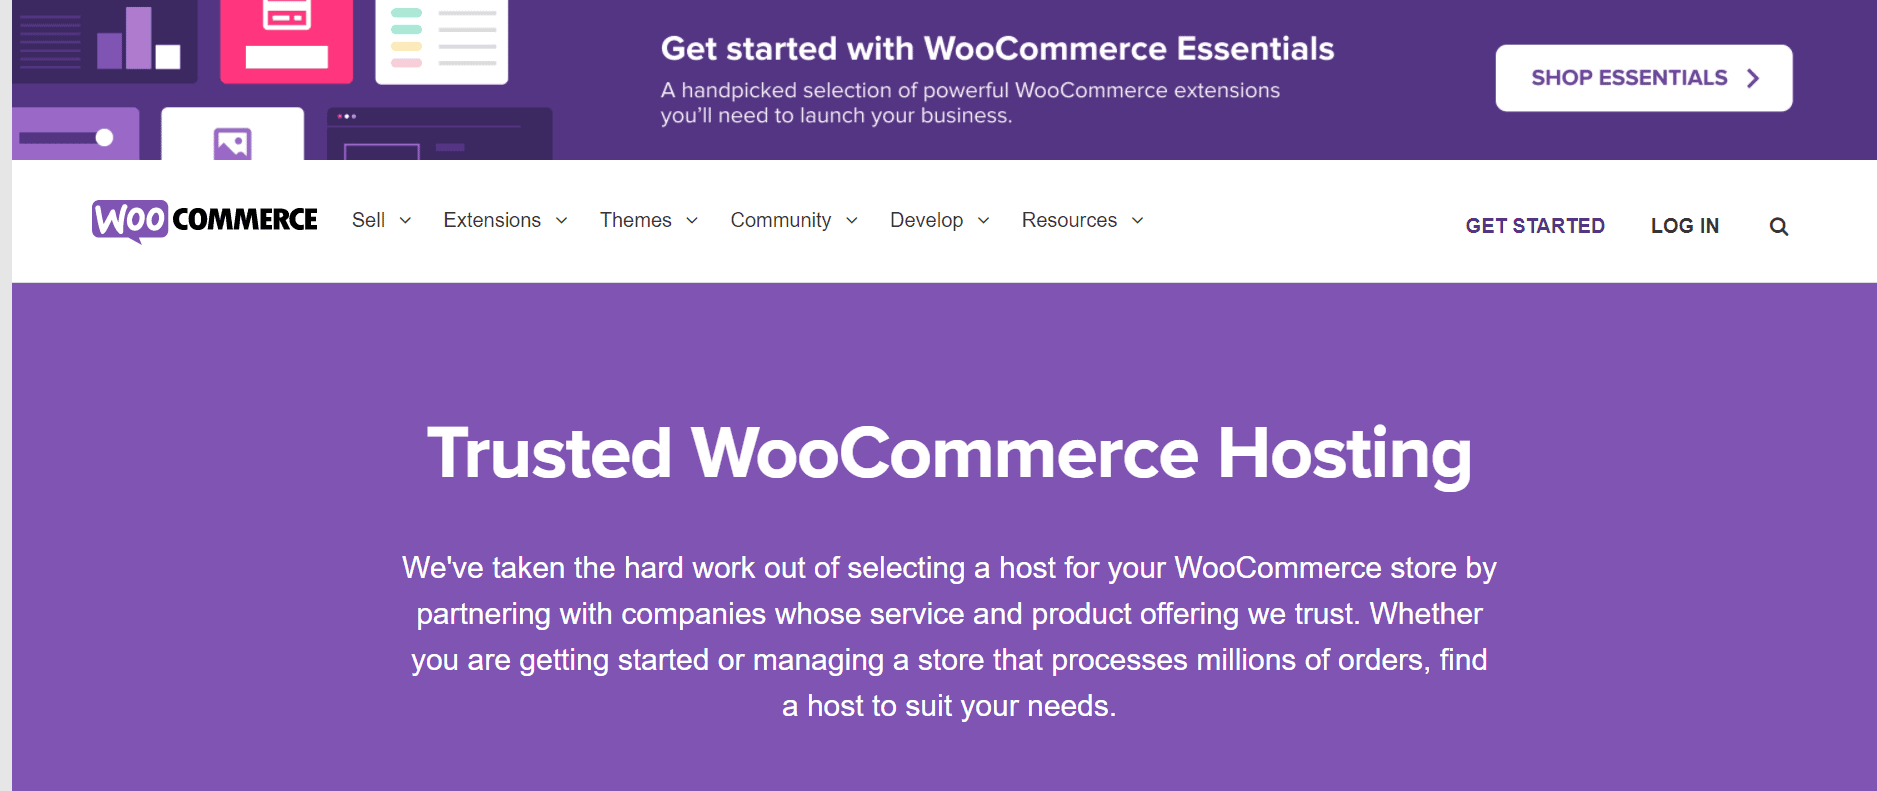 WooCommerce Hosting